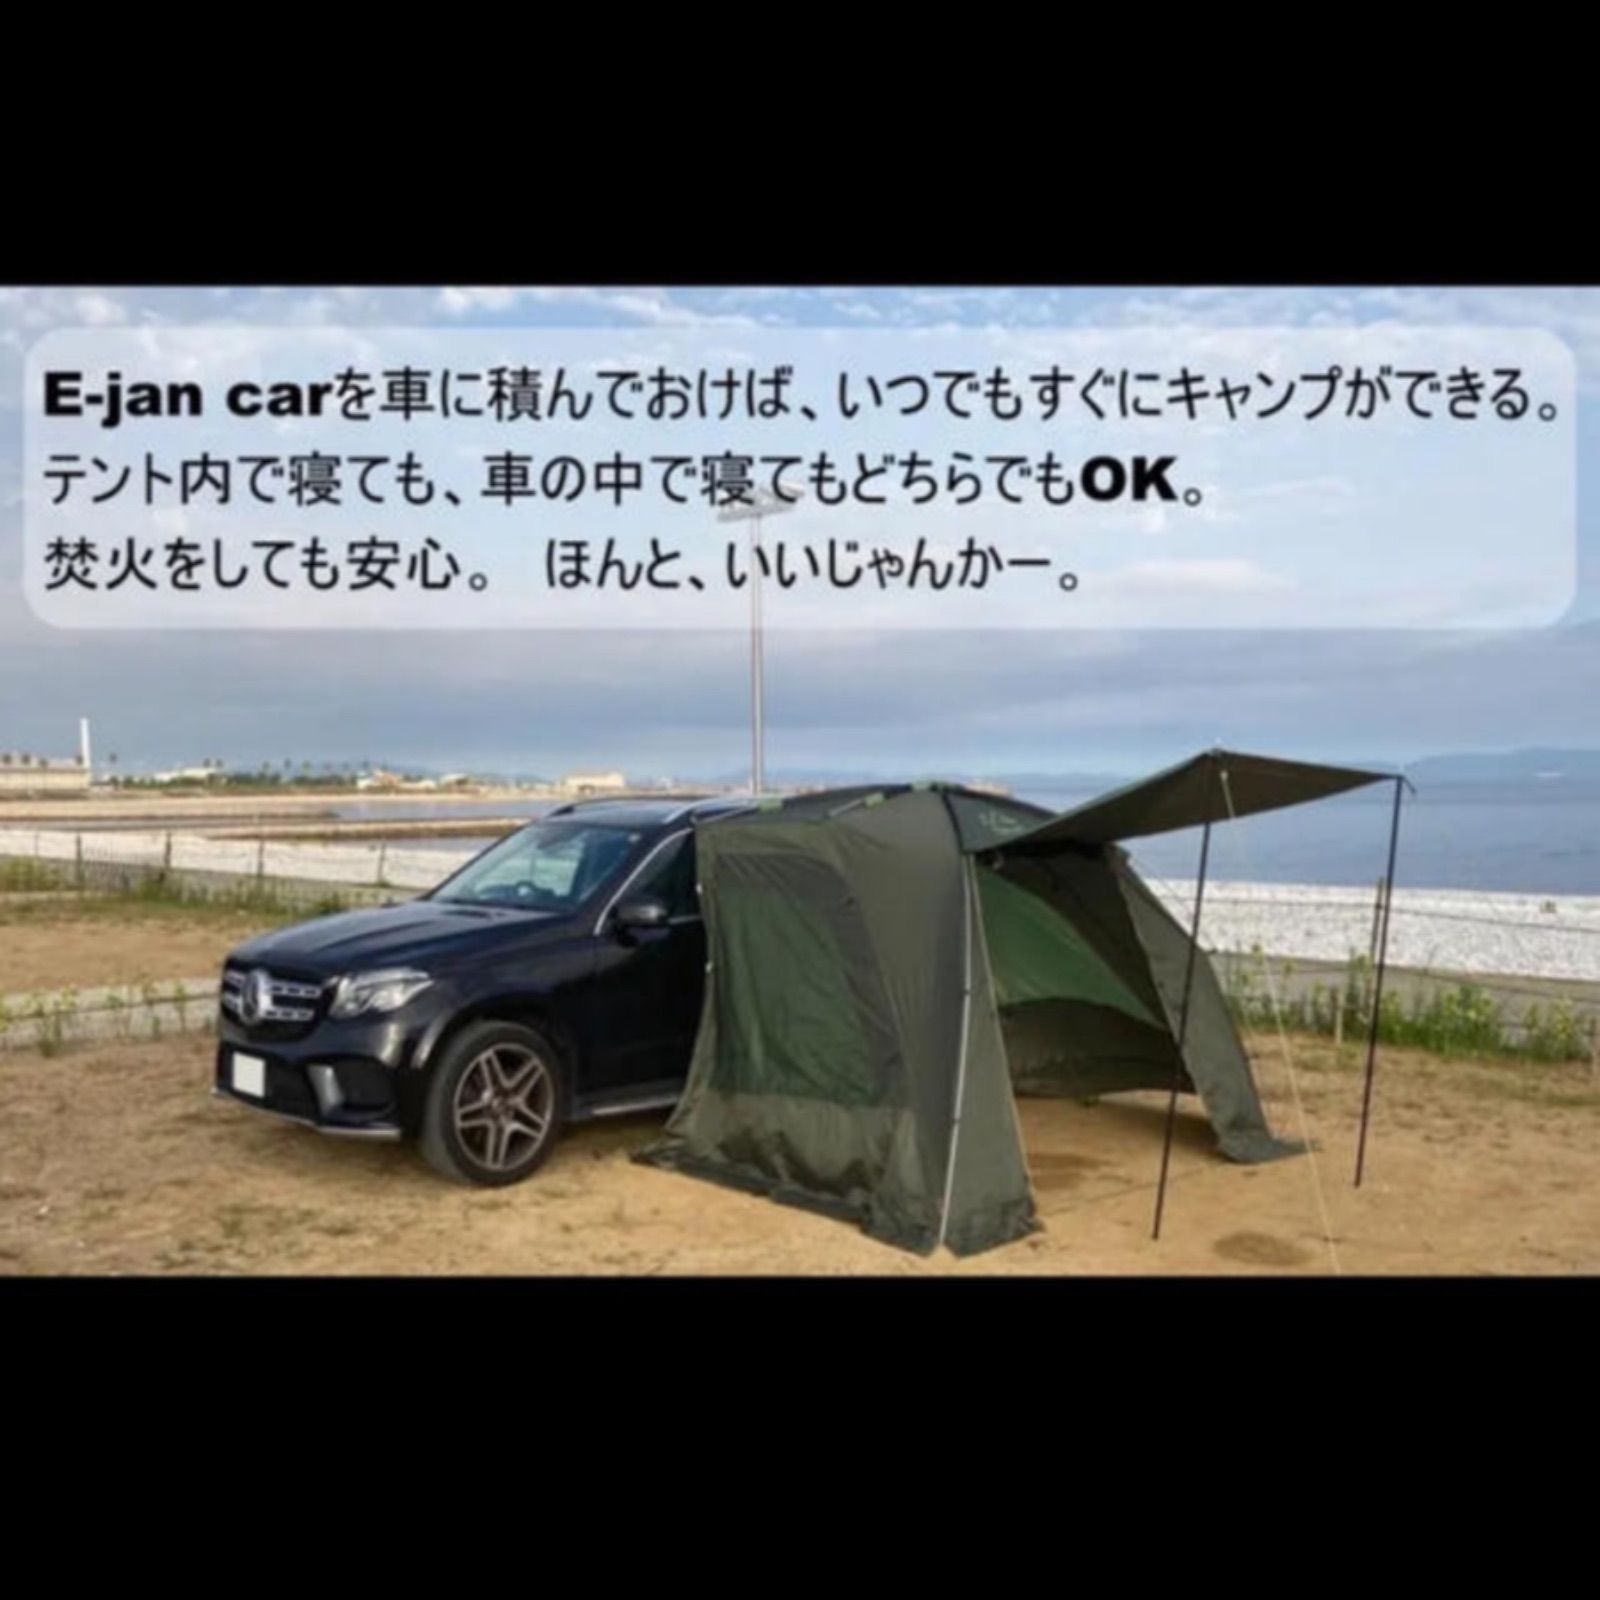 8tail E-jan car イイジャンカー カーサイドテント 焚火ができる